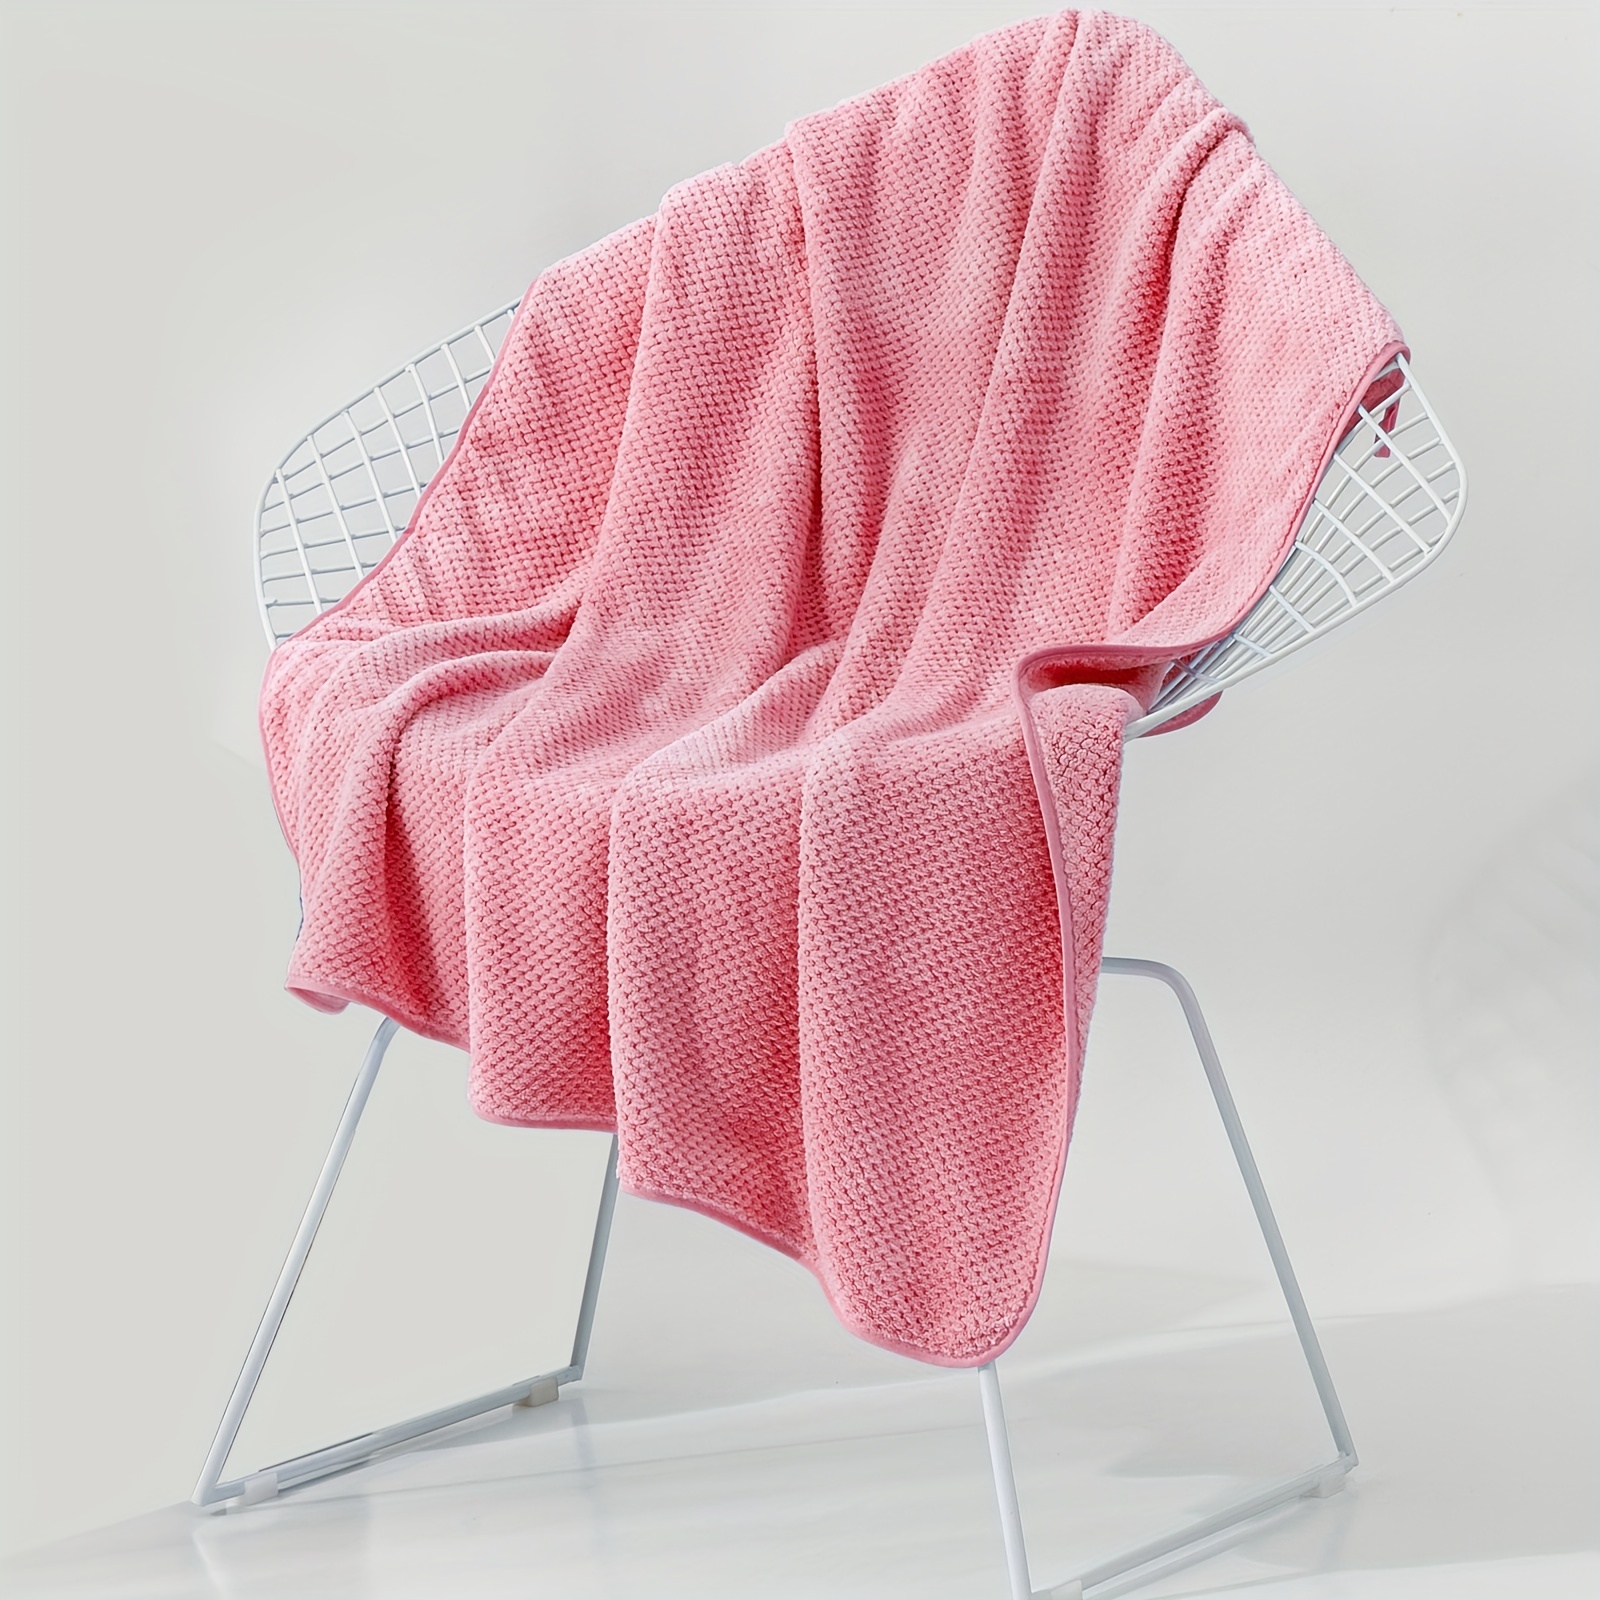 OLESTER Microfiber Bath Towels 4 Colors for Shower Pool Beach